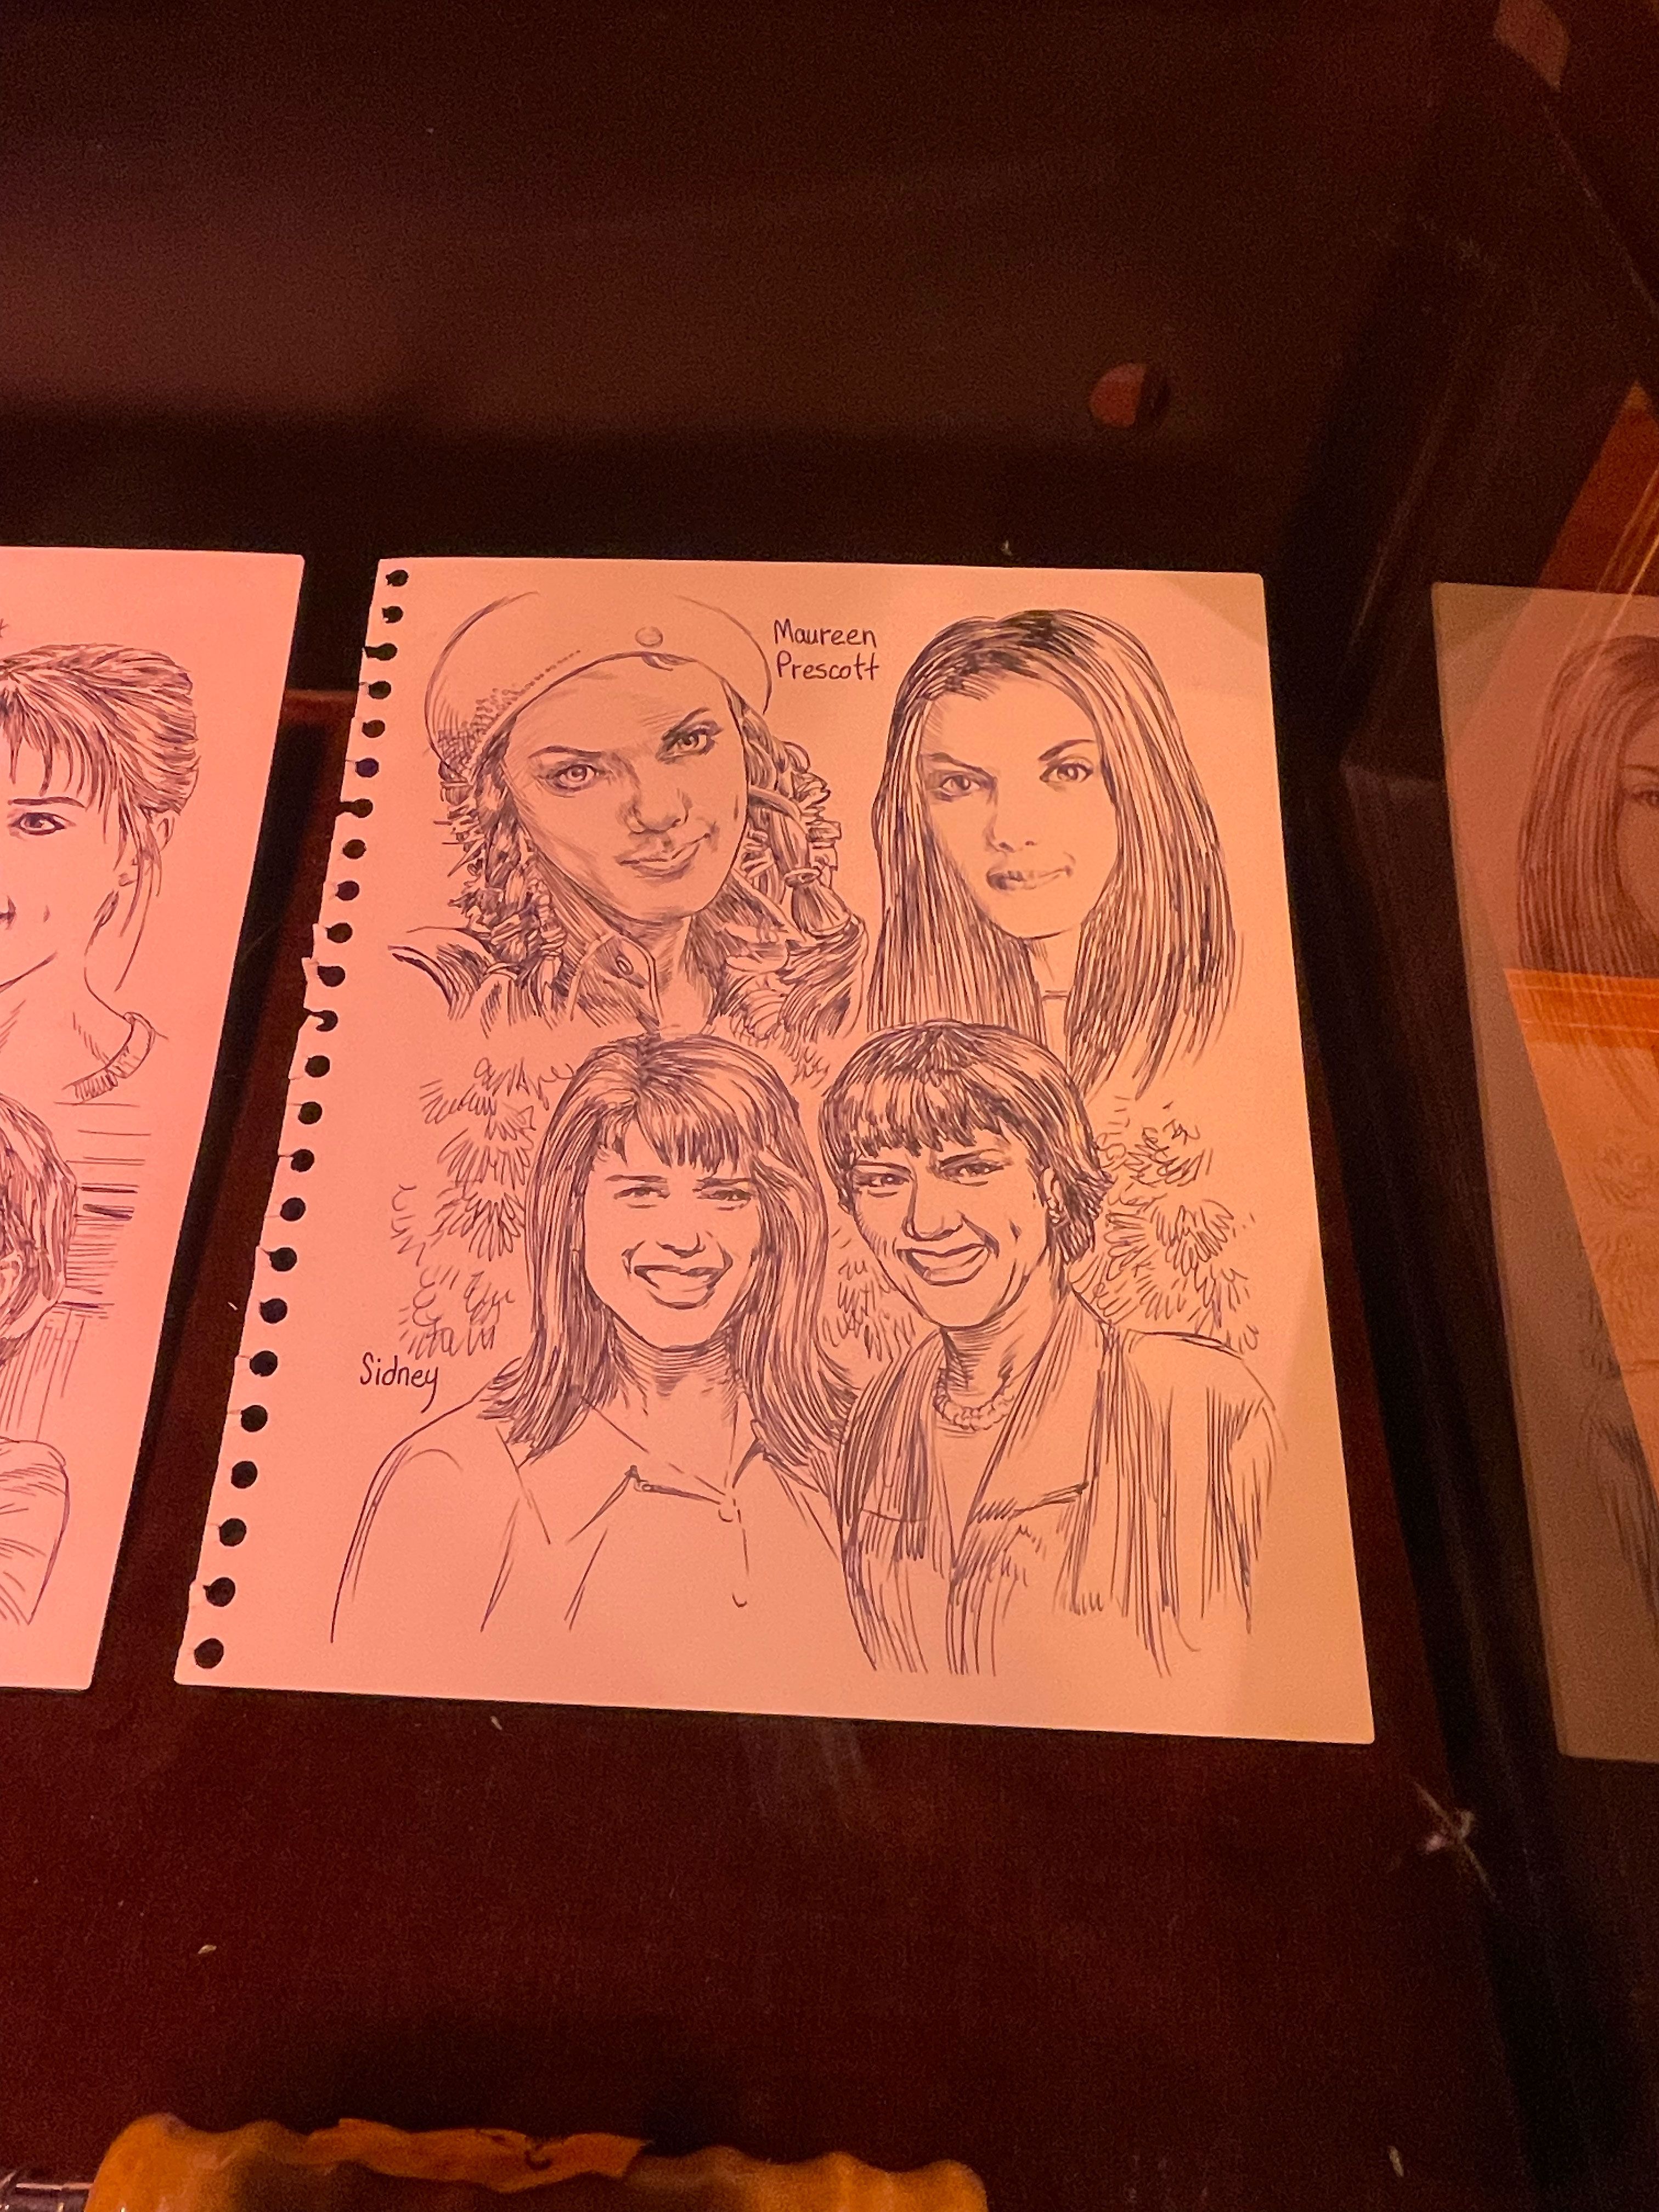 Maureen Prescott drawing in the Scream VI experience.